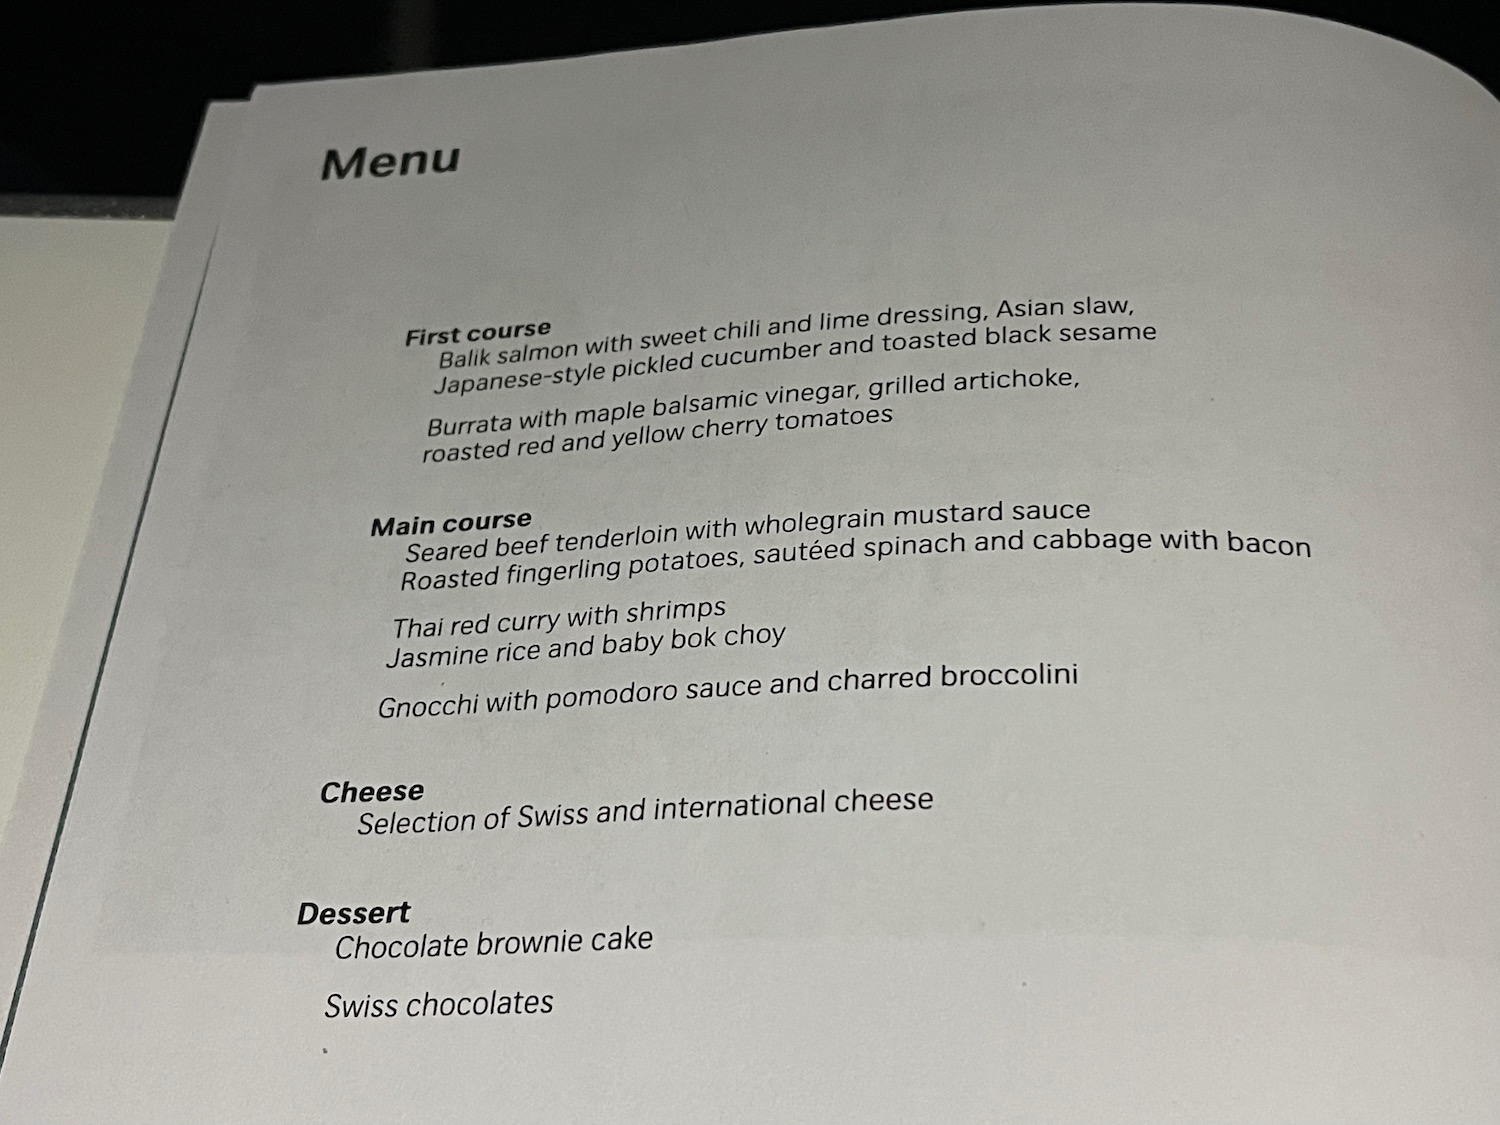 a menu on a black surface